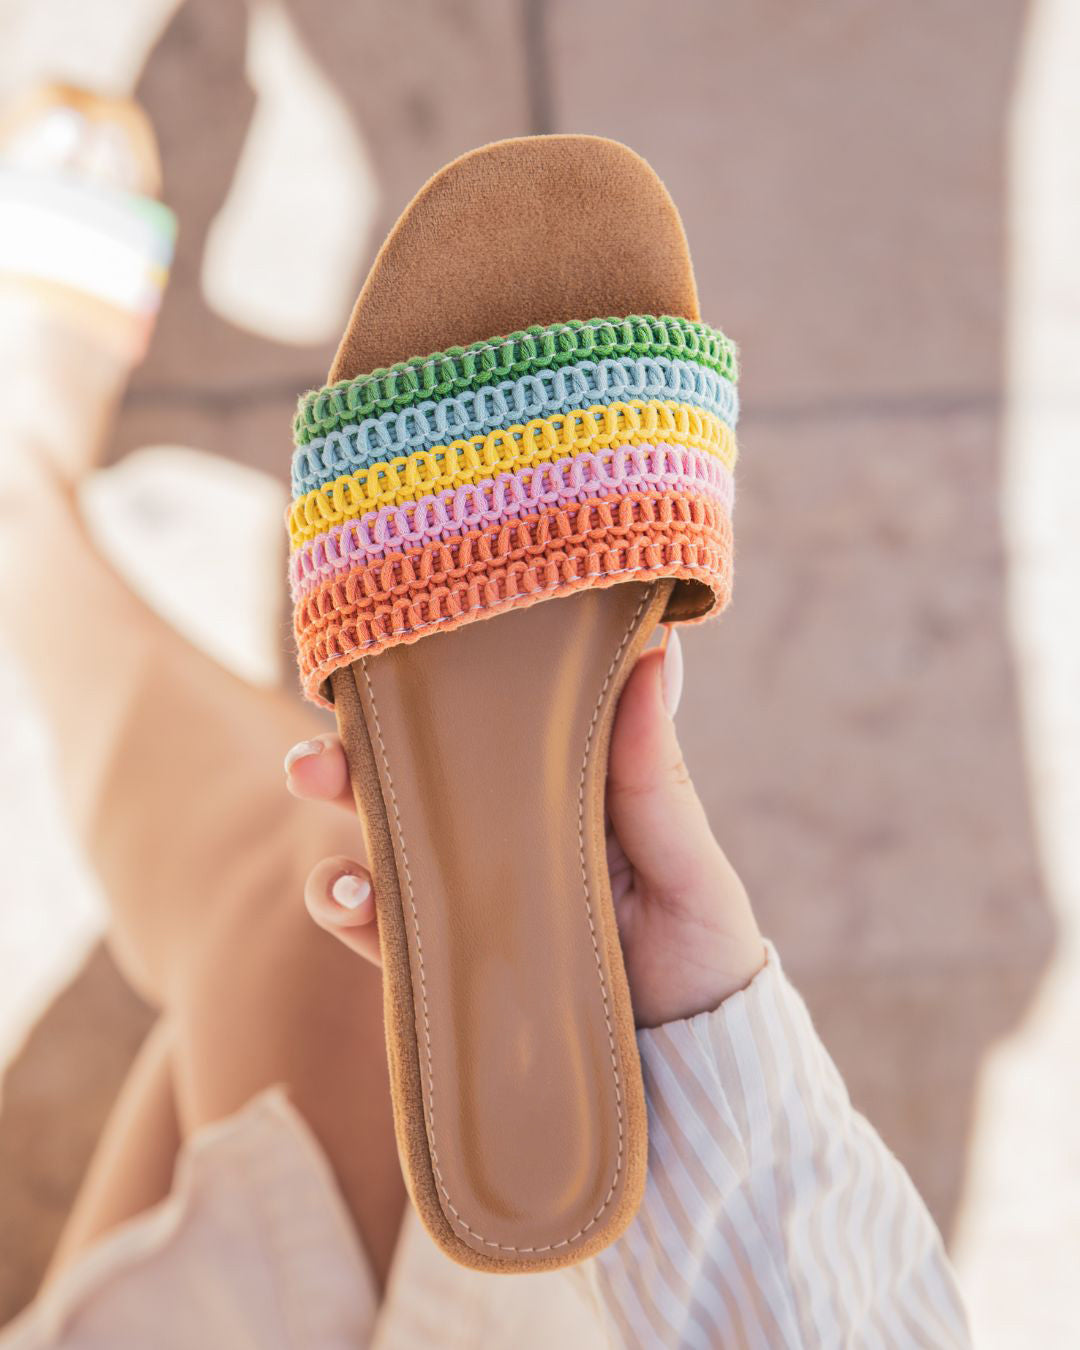 Sandale femme plate mule multicolore - Eulalie